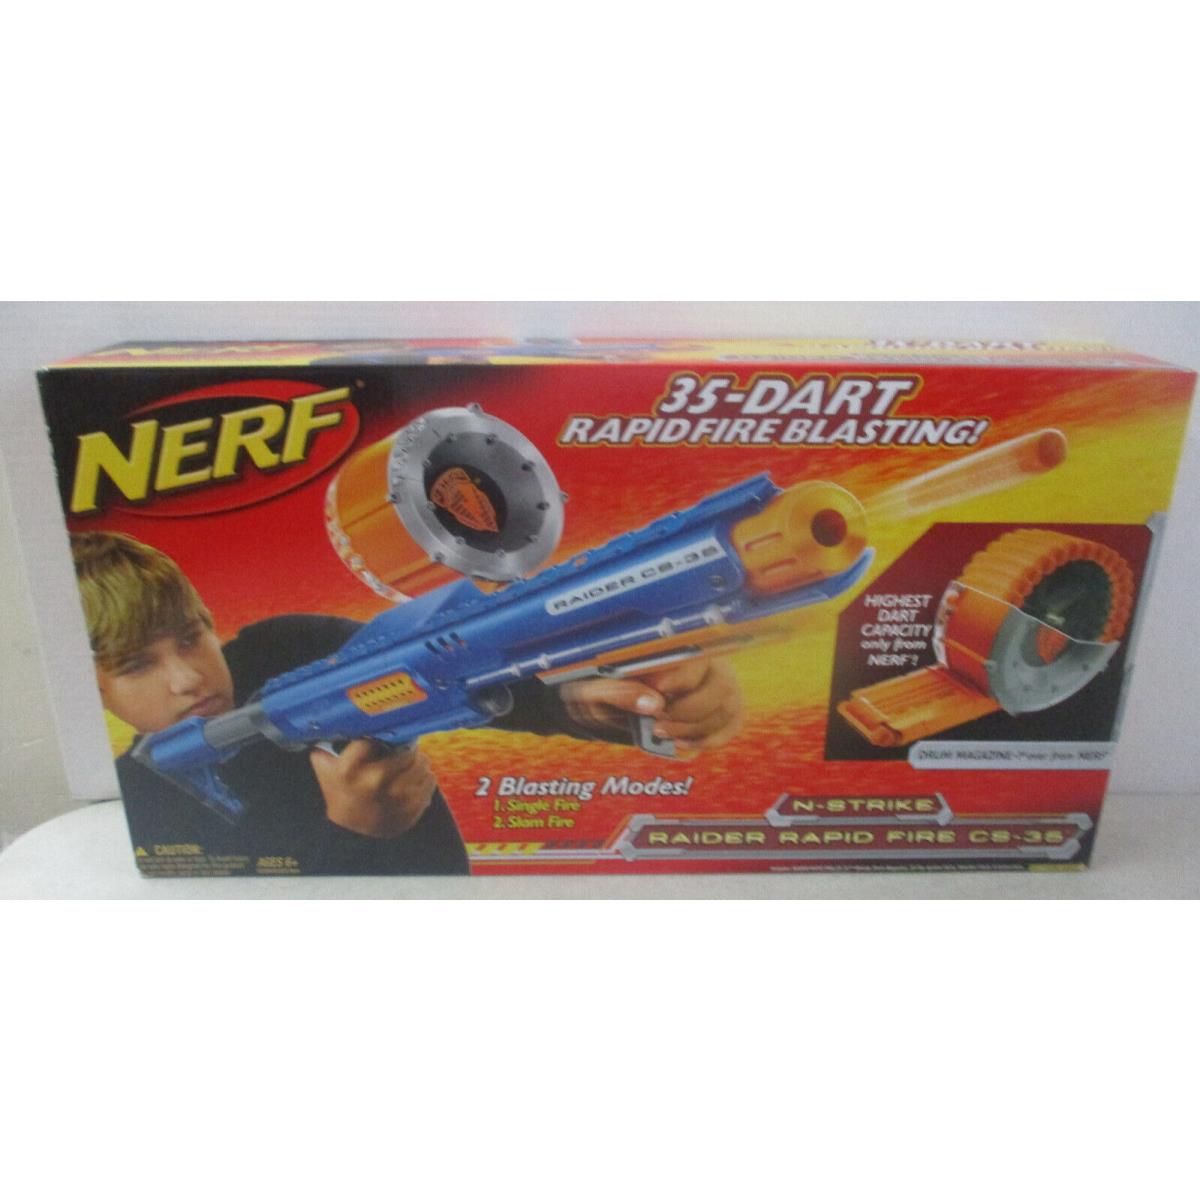 Mib 2008 Nerf N-strike Raider Rapid Fire CS-35 BY Hasbro